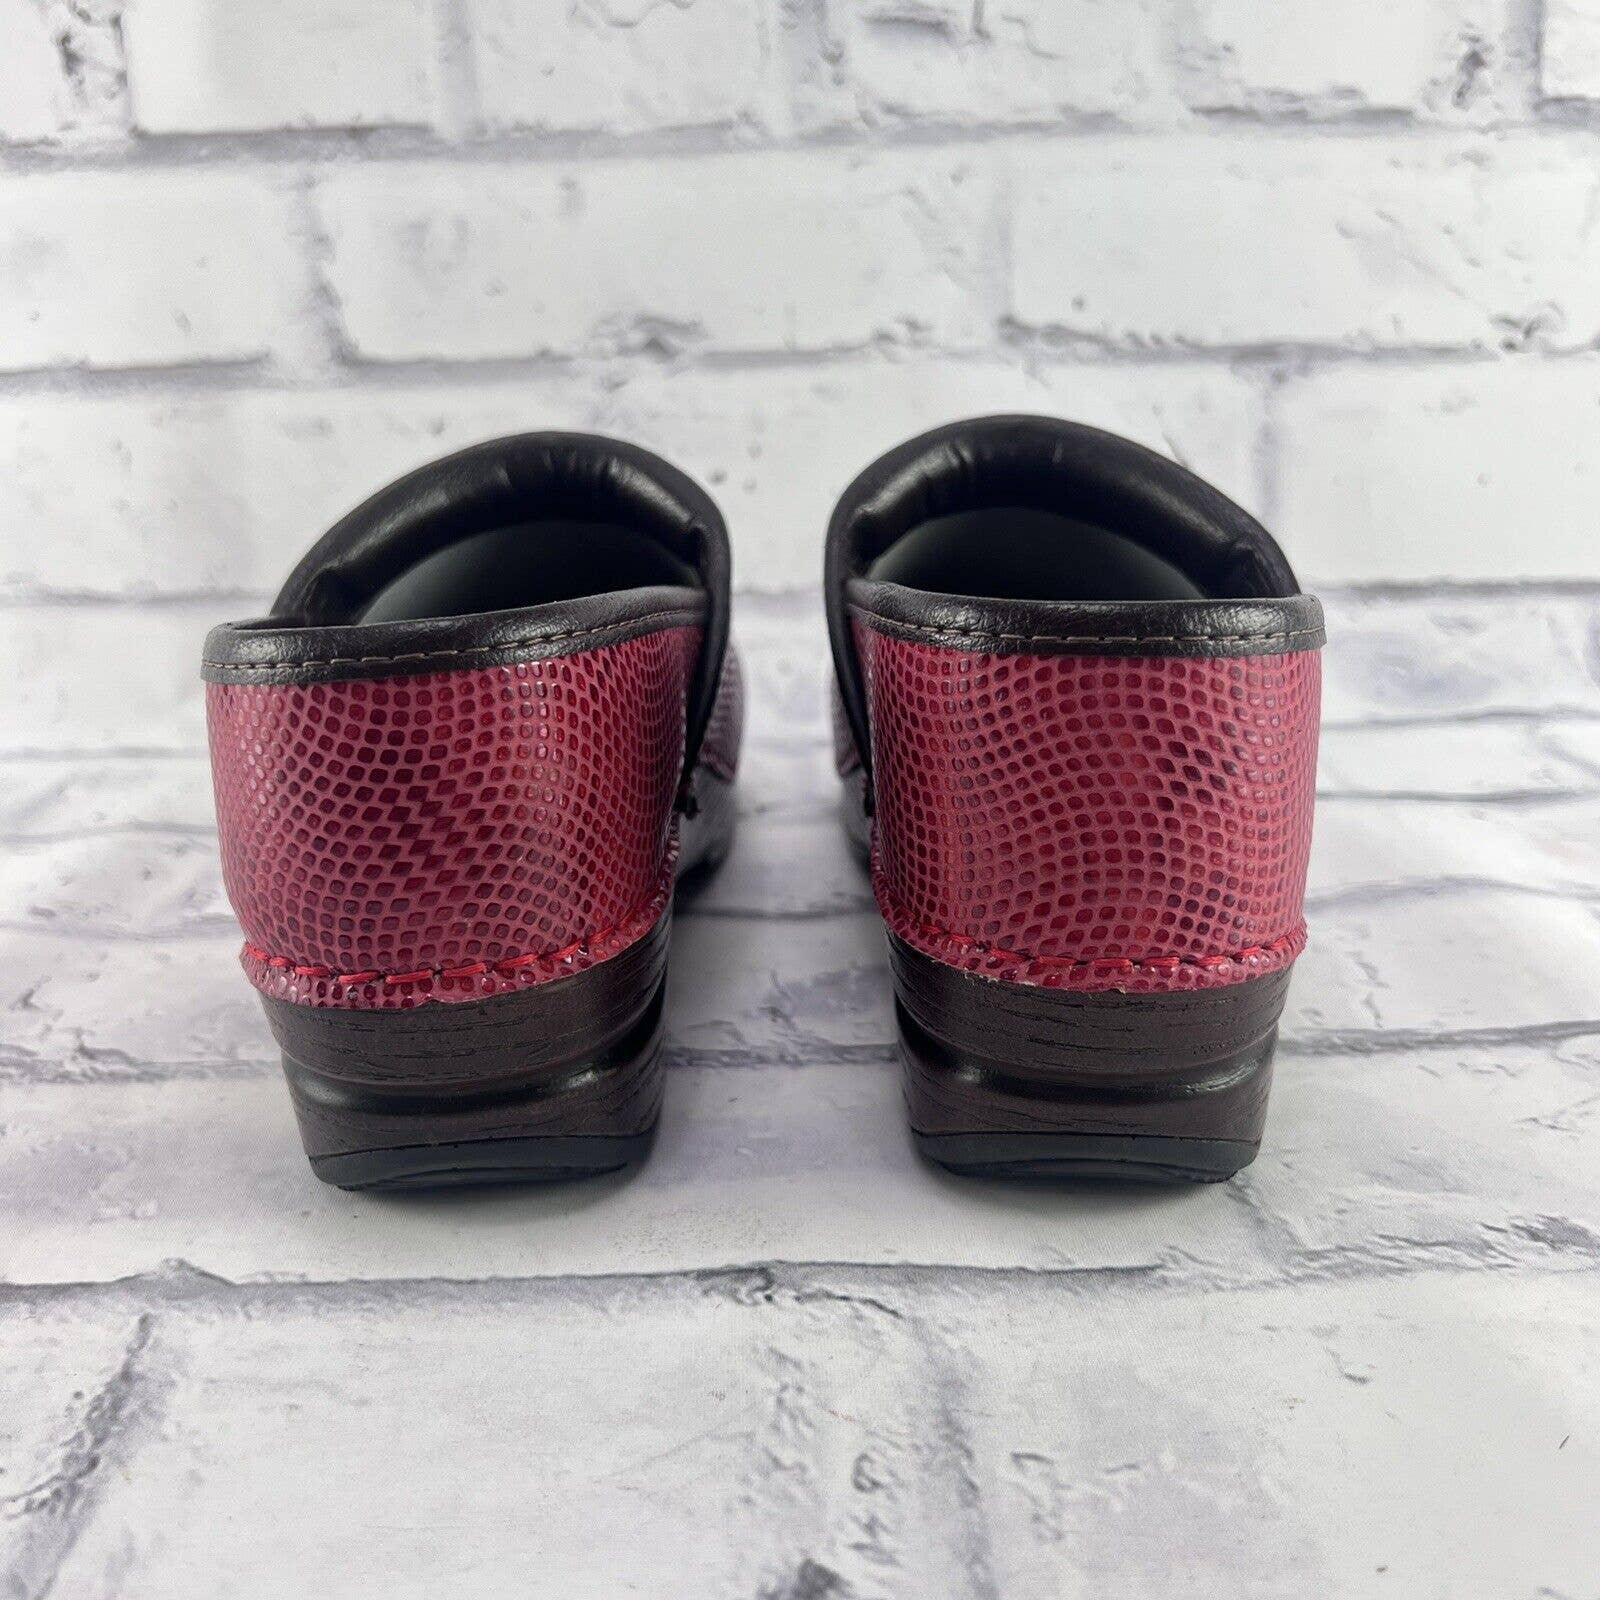 Dansko XP Red Moray Clogs Women’s 37 (US 6.5 - 7) Snakeskin Leather Shoes